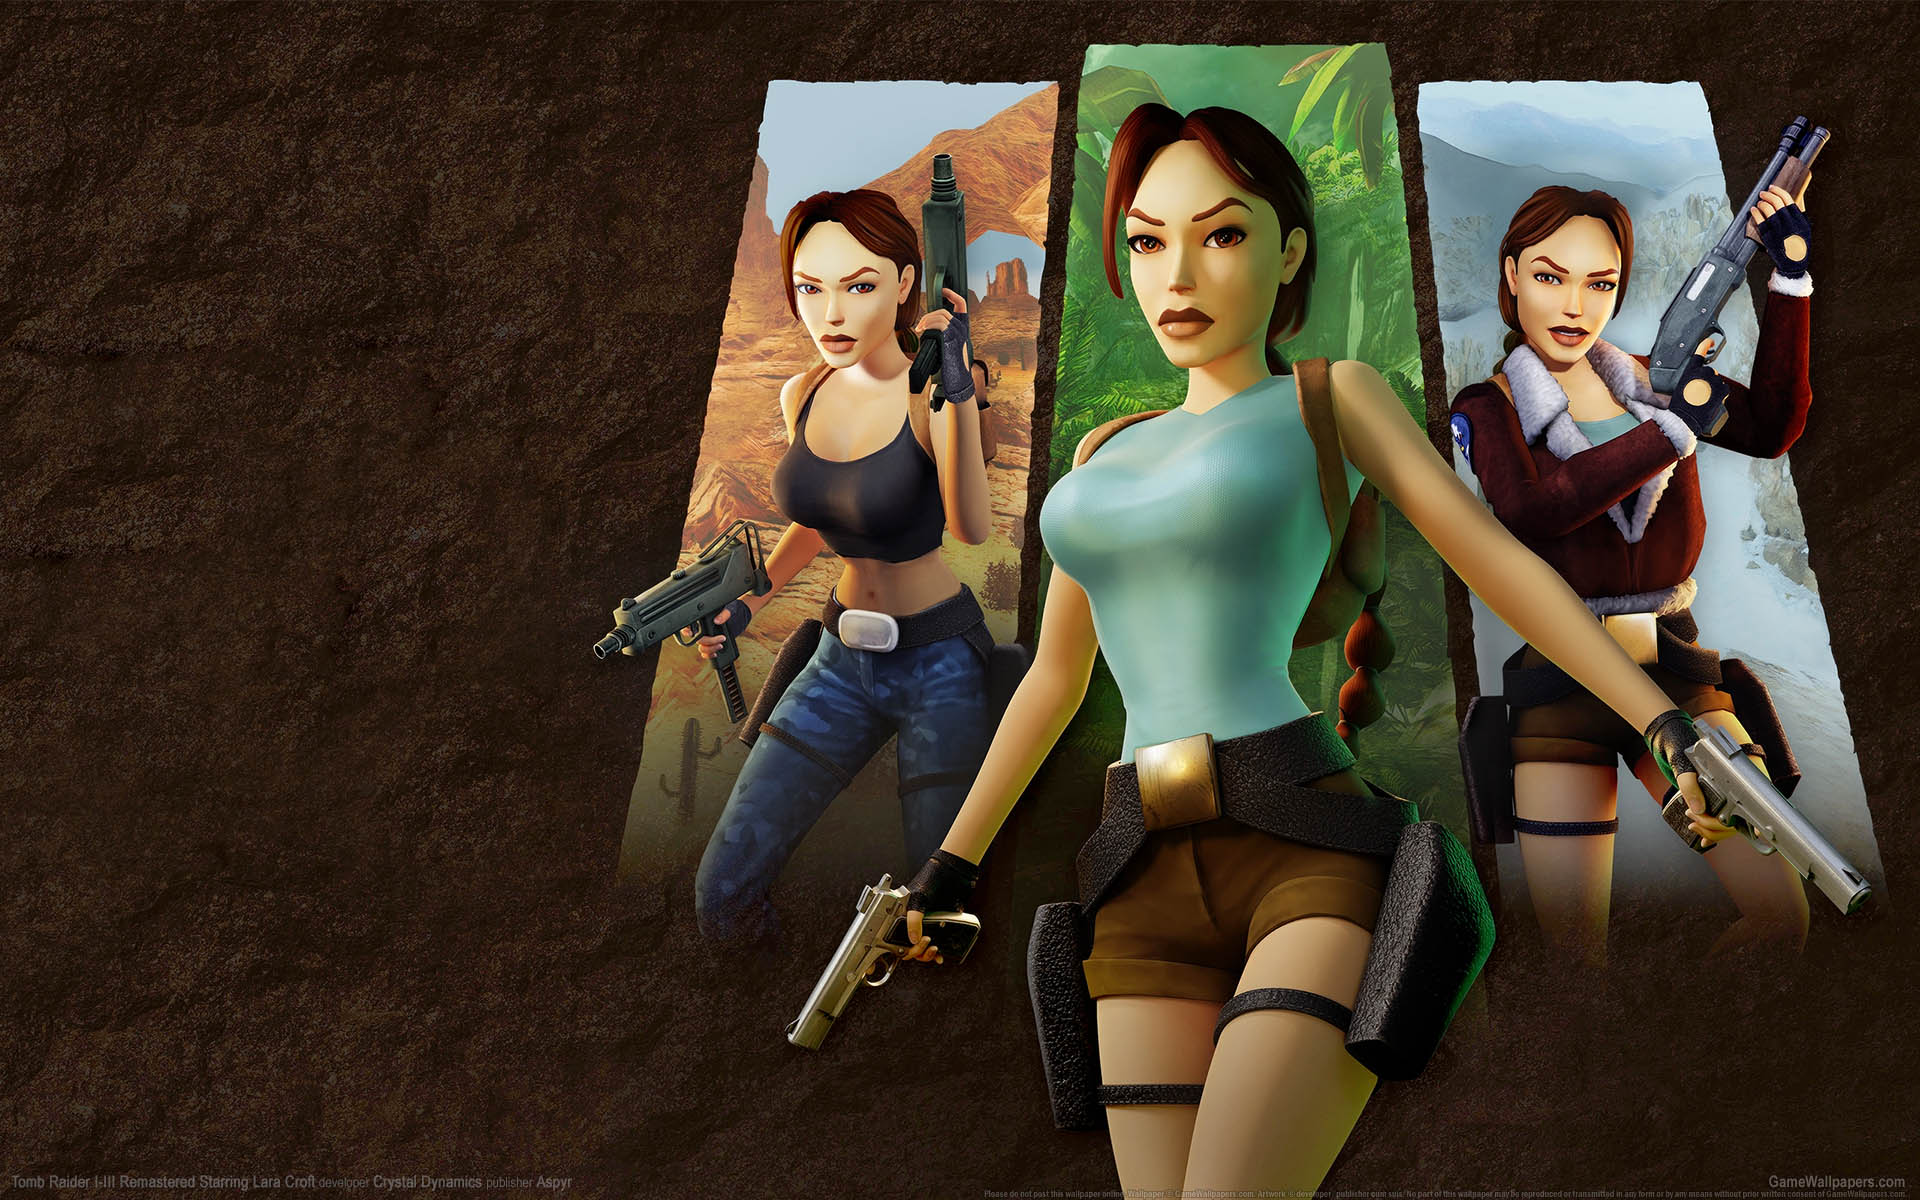 Tomb Raider I-III Remastered Starring Lara Croft wallpaper 01 1920x1200